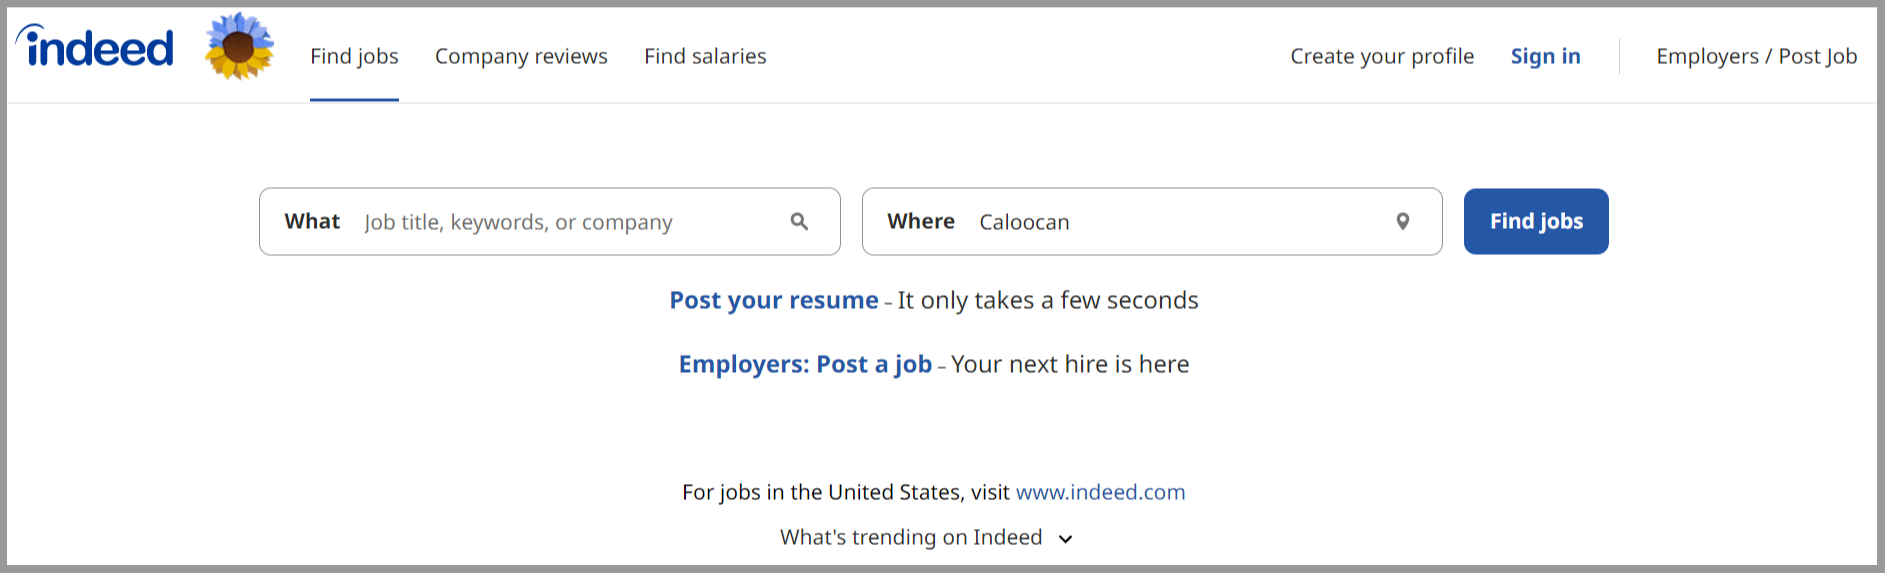 Job_Site_indeed.com